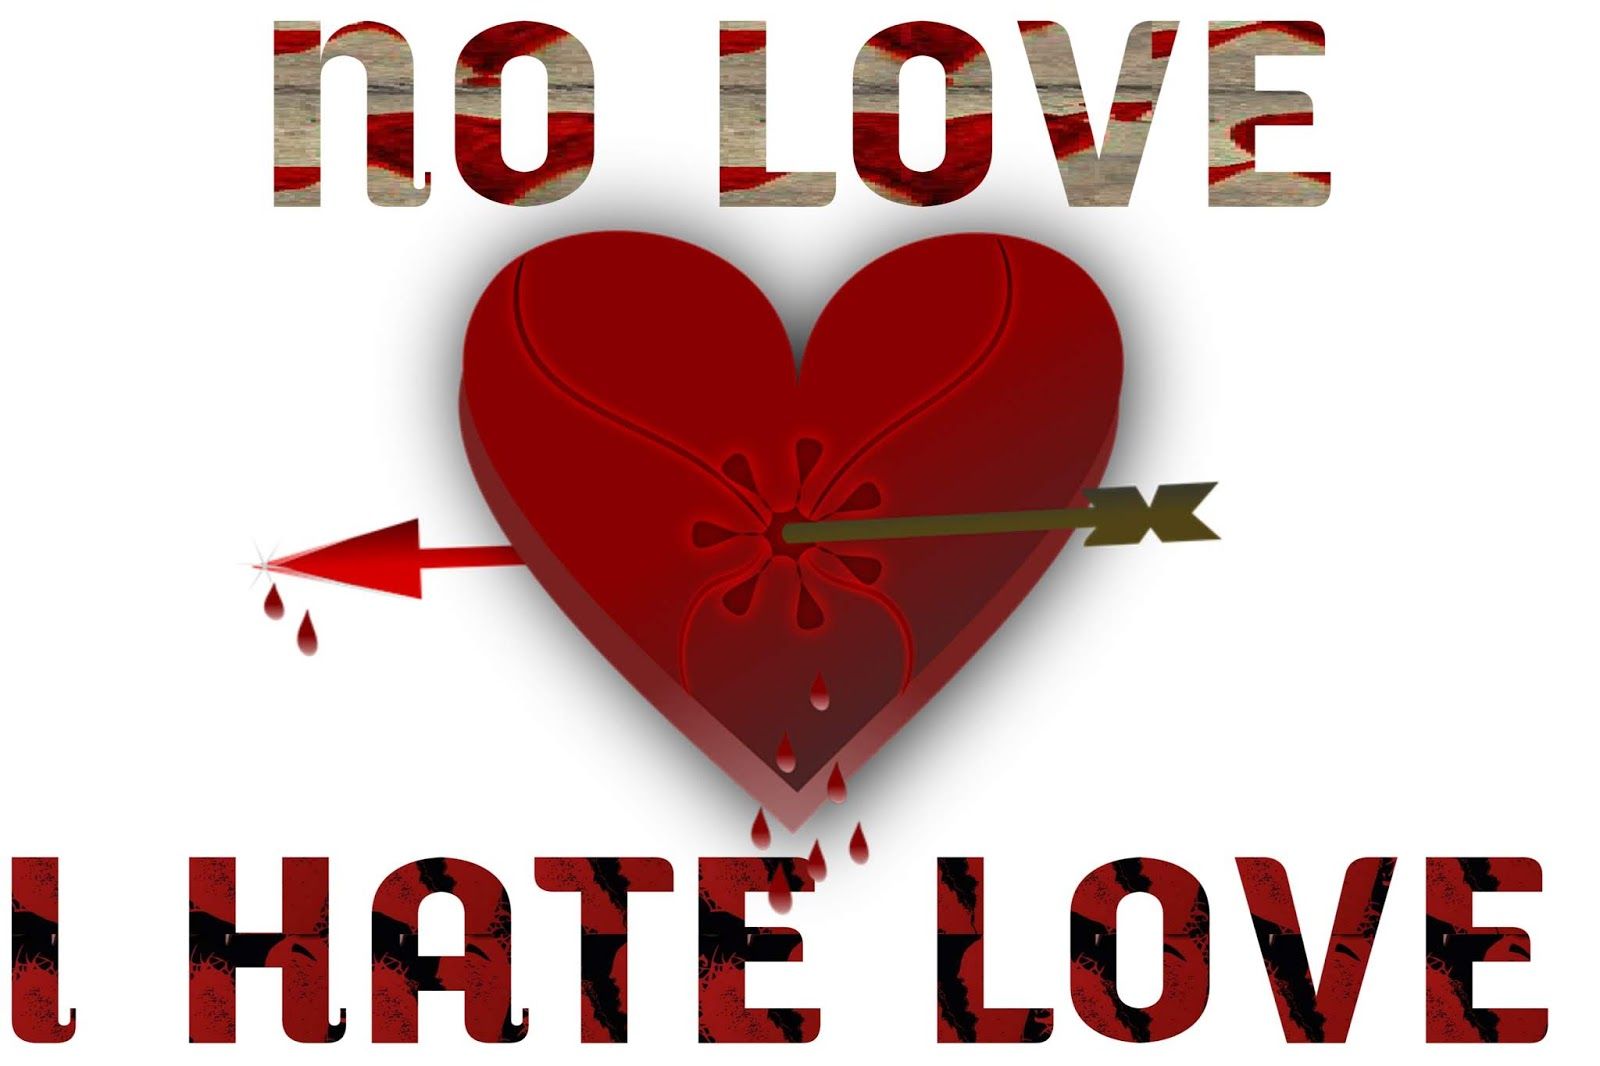 Hate Love Image, Hate Love Pic, Hate Love Photo